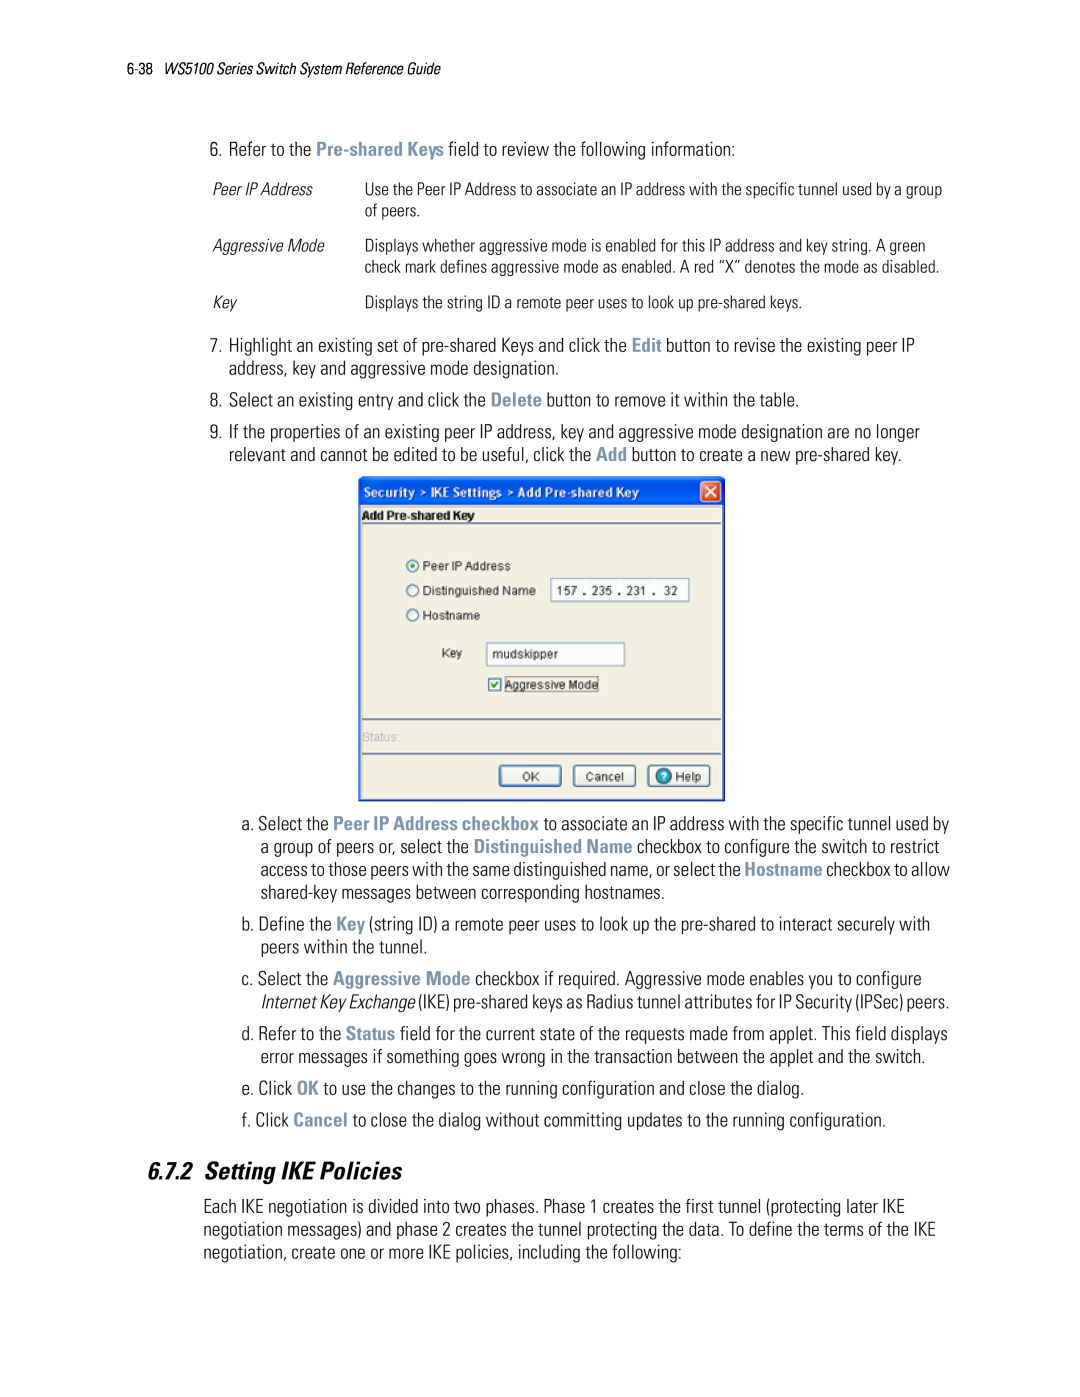 Motorola WS5100 manual Setting IKE Policies, Peer IP Address, of peers, Aggressive Mode 